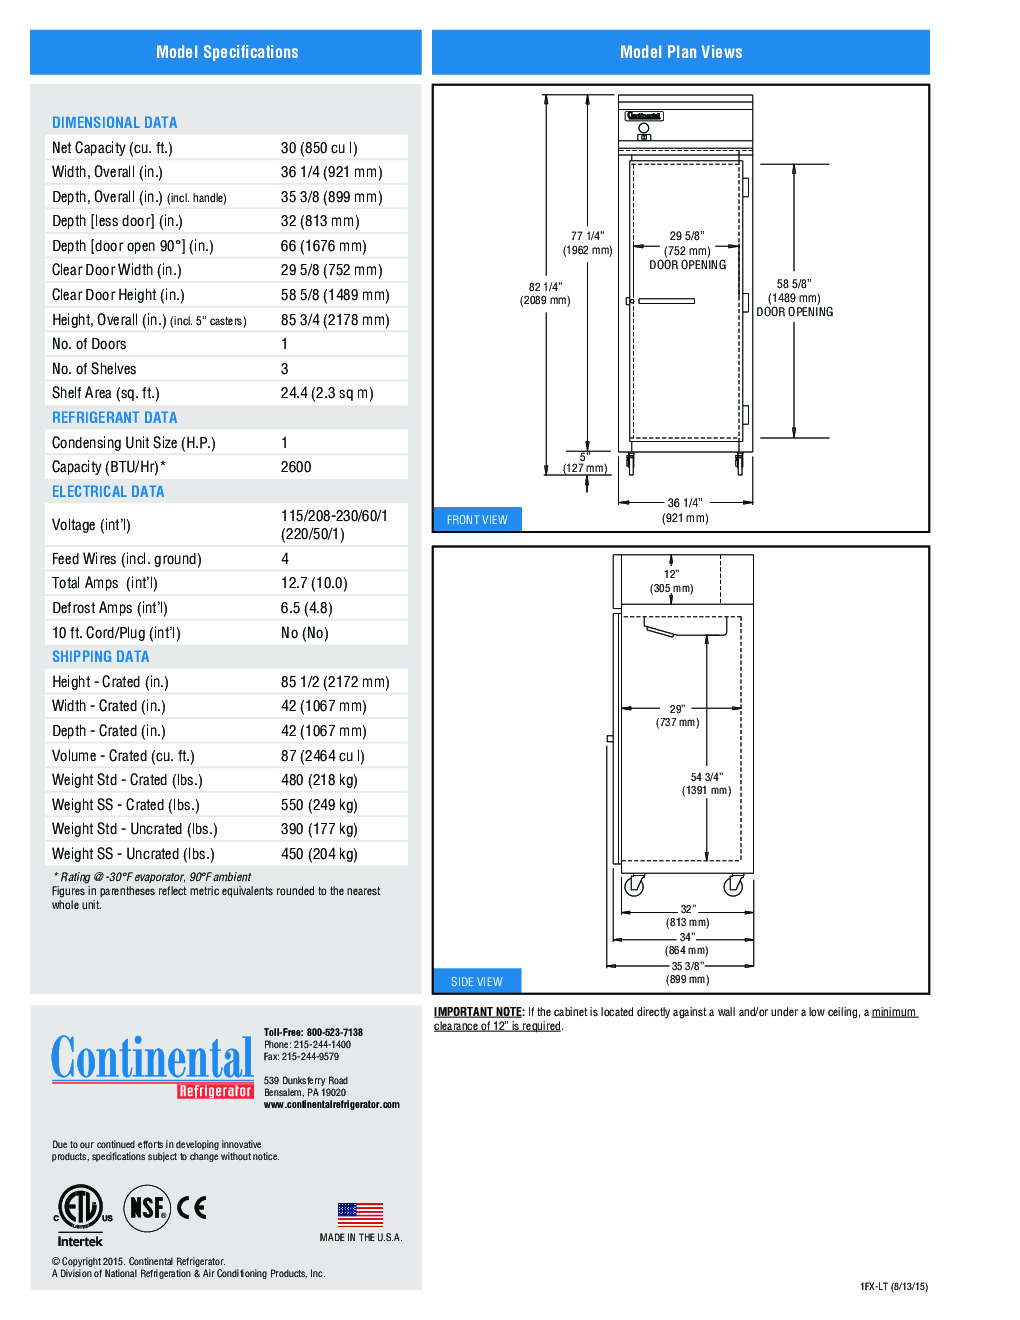 Continental Refrigerator 1FX-LT-SS Reach-In Low Temperature Freezer